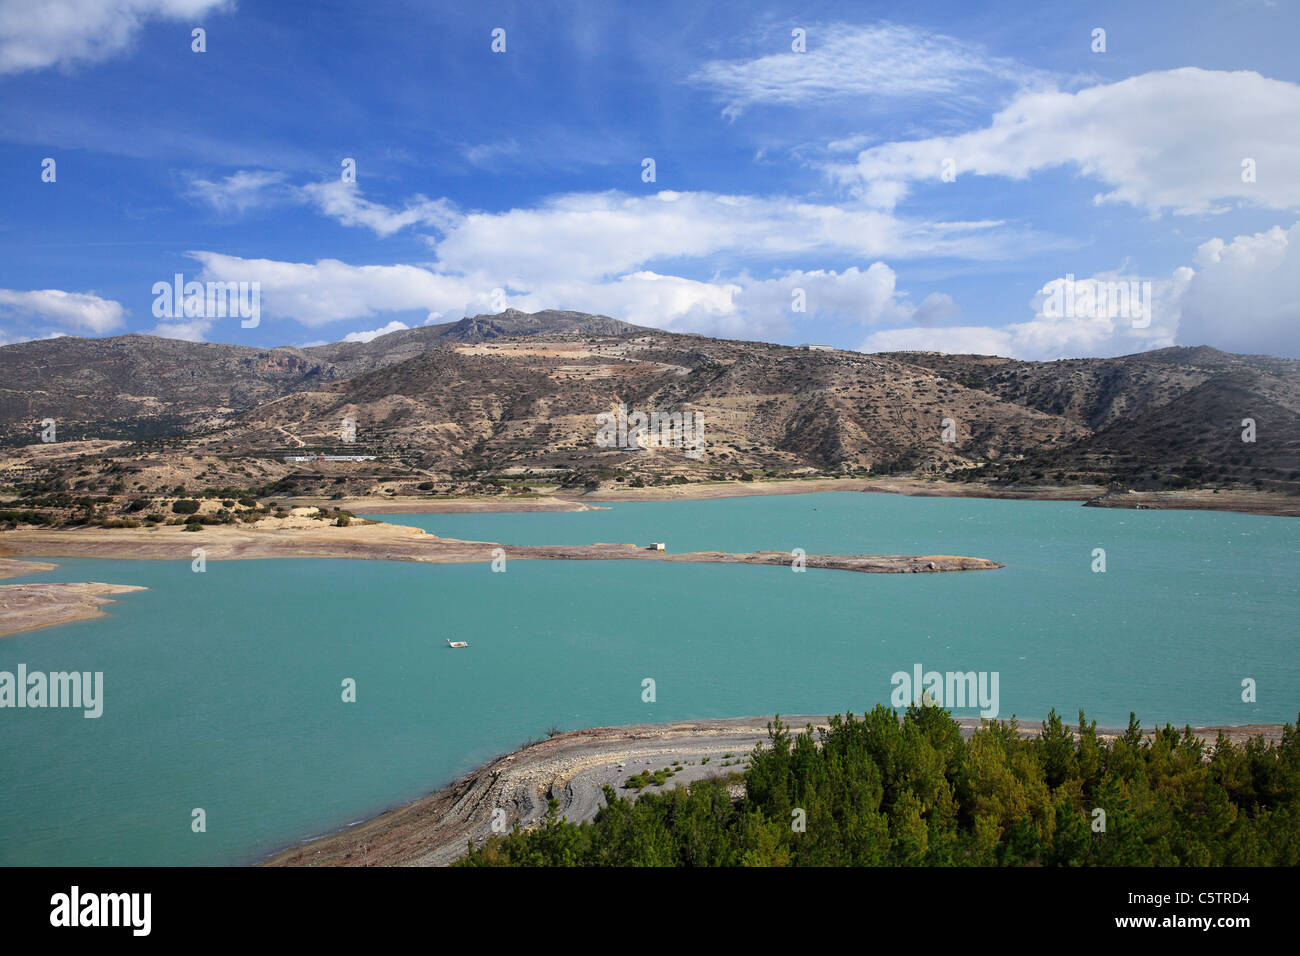 Greece, Crete, Ierapetra, Bramiana, View of reservoir Stock Photo